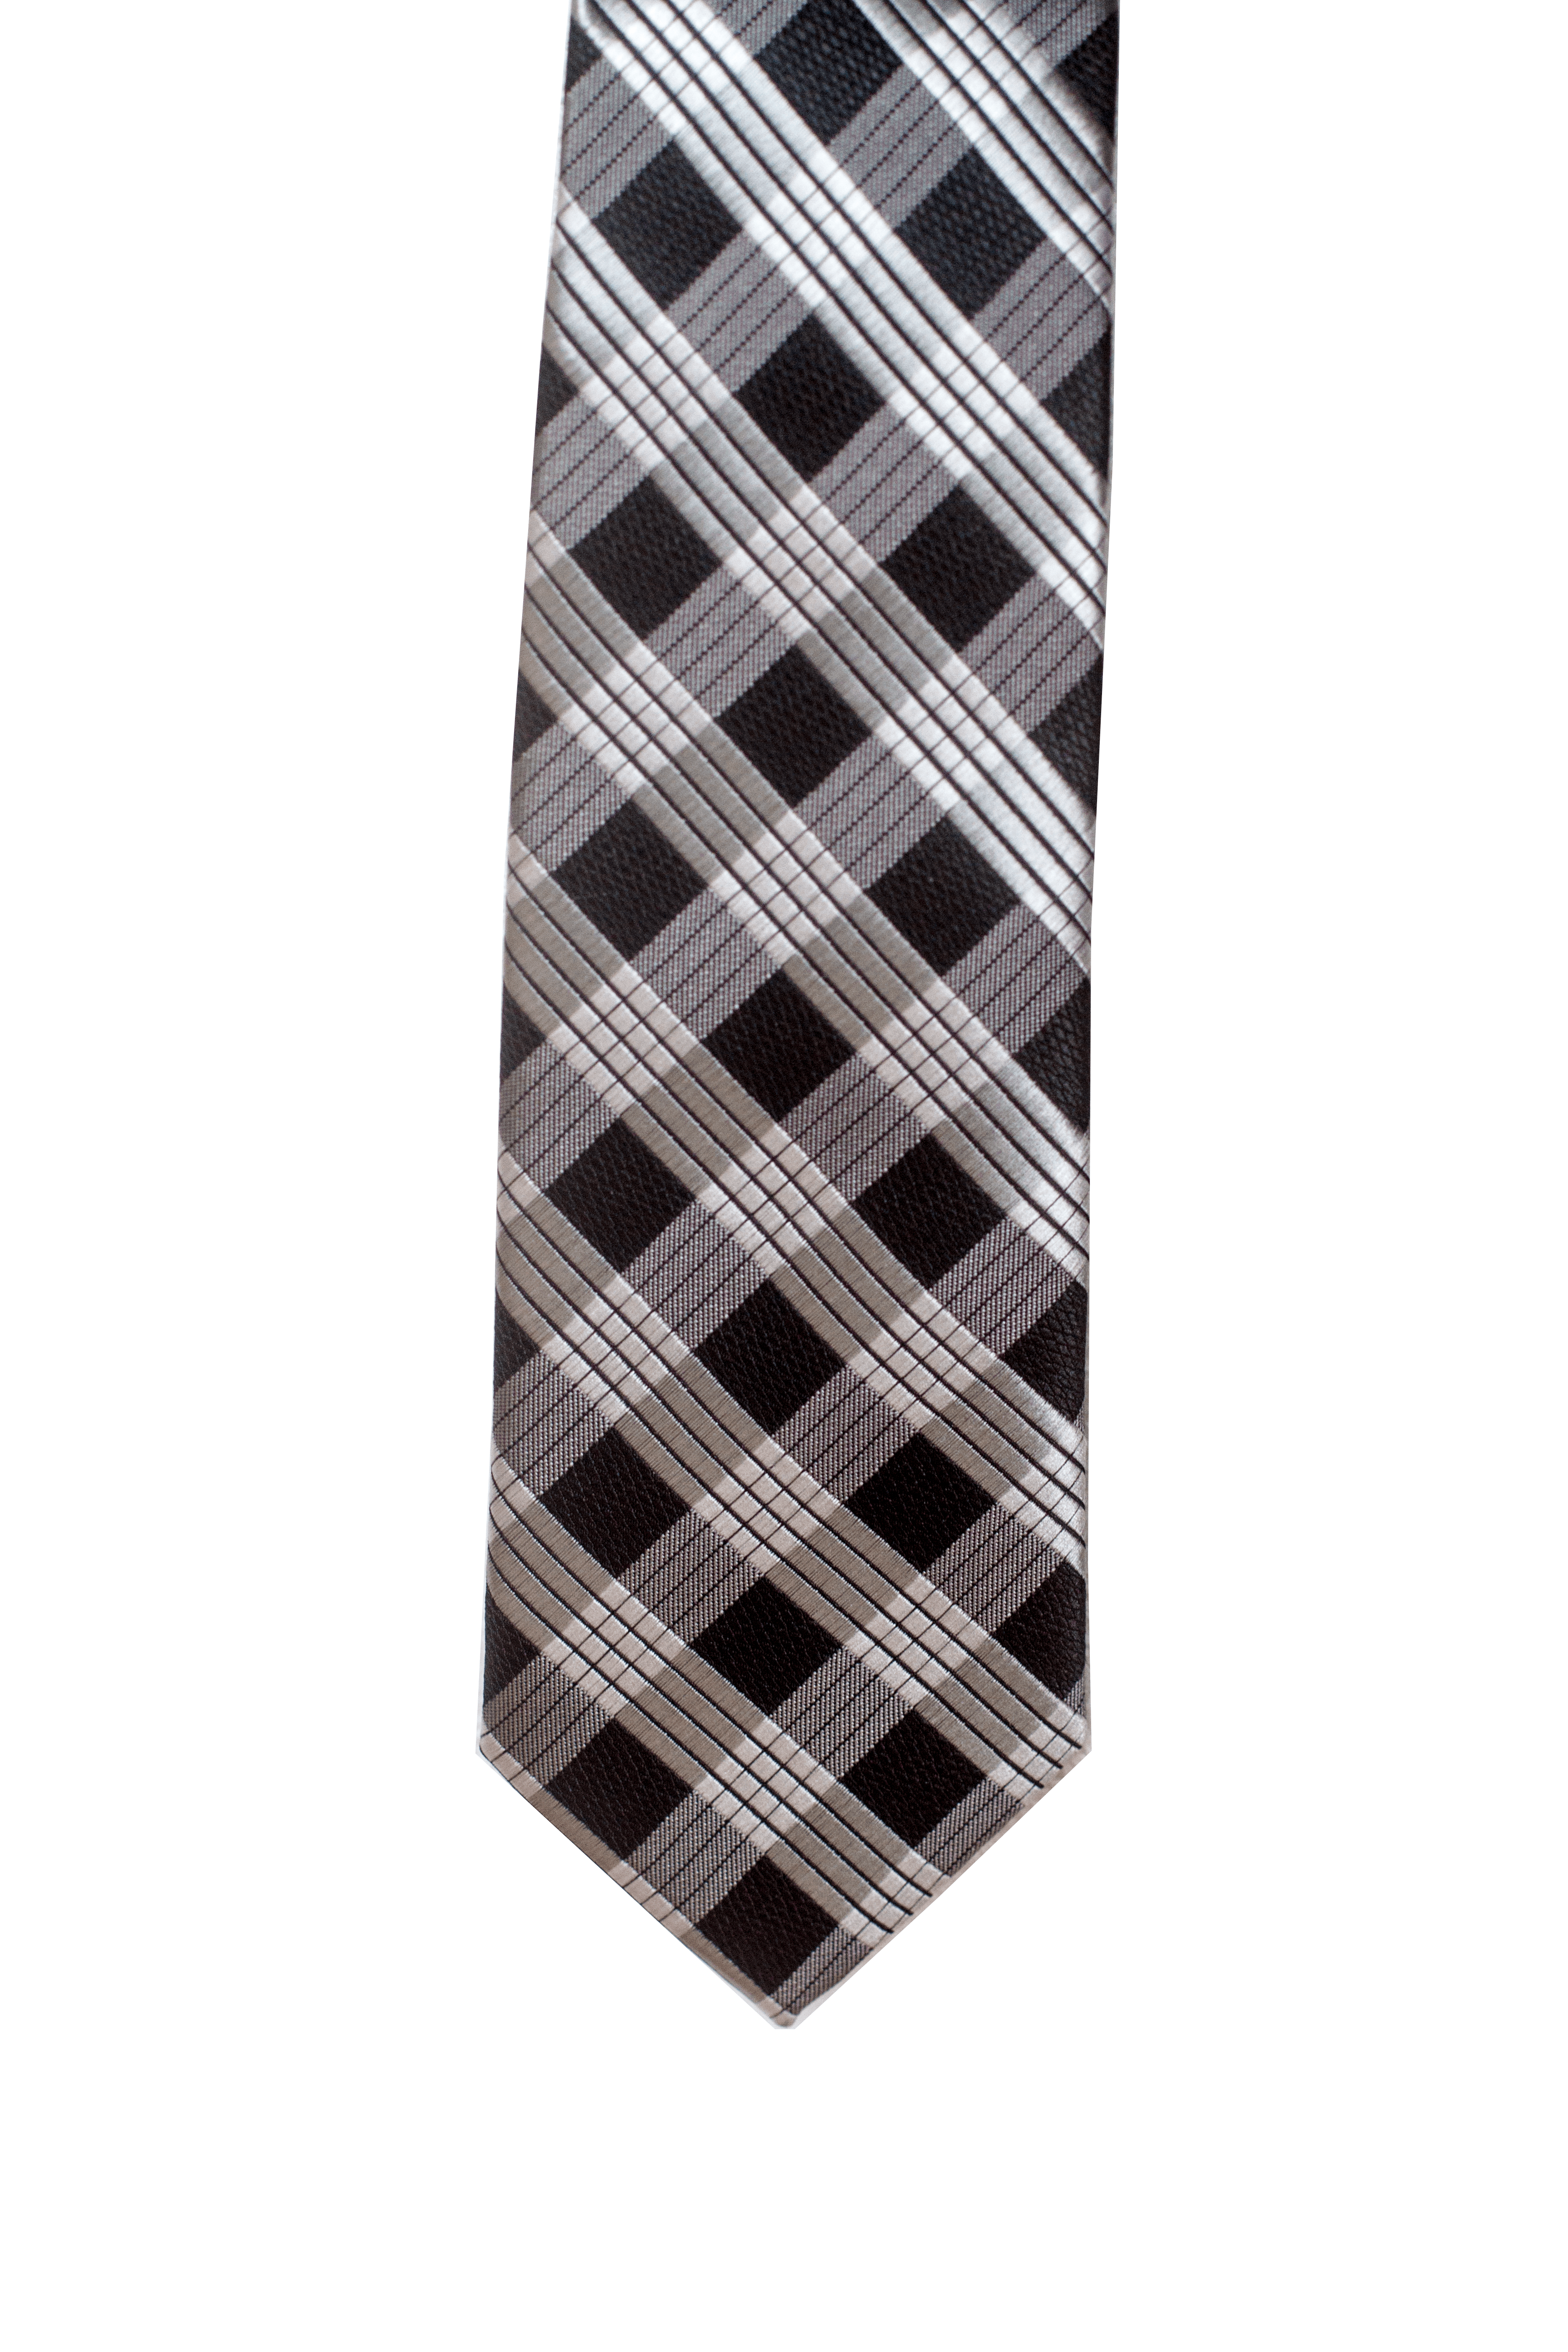 Palaka Black Kids Zipper Necktie